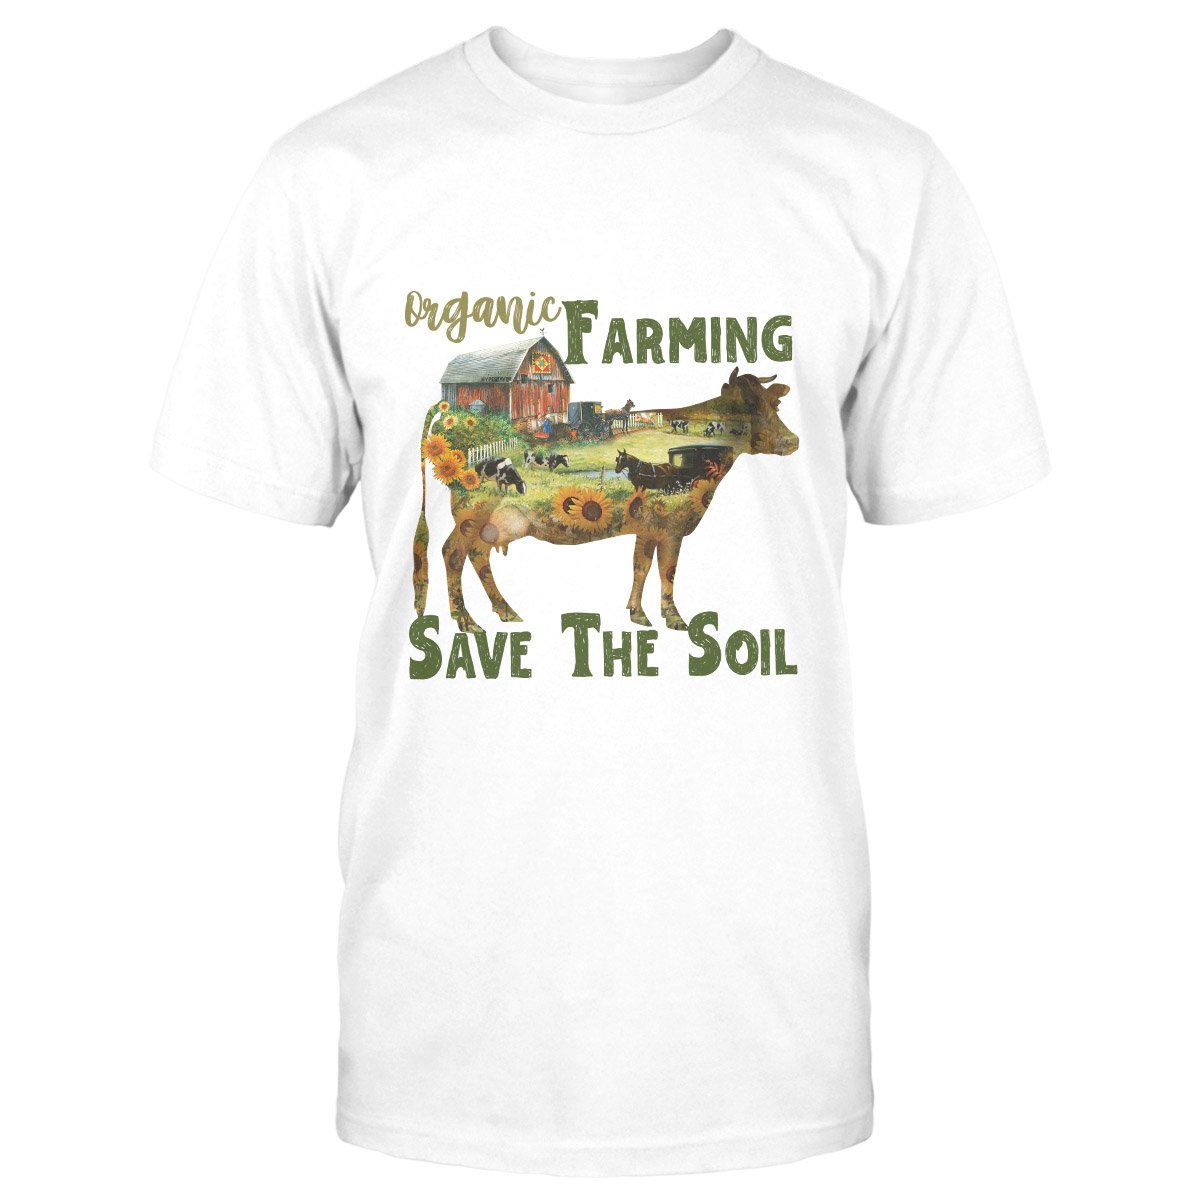 Organic Farming Save The Soil Ez19 1209 Classic T-Shirt